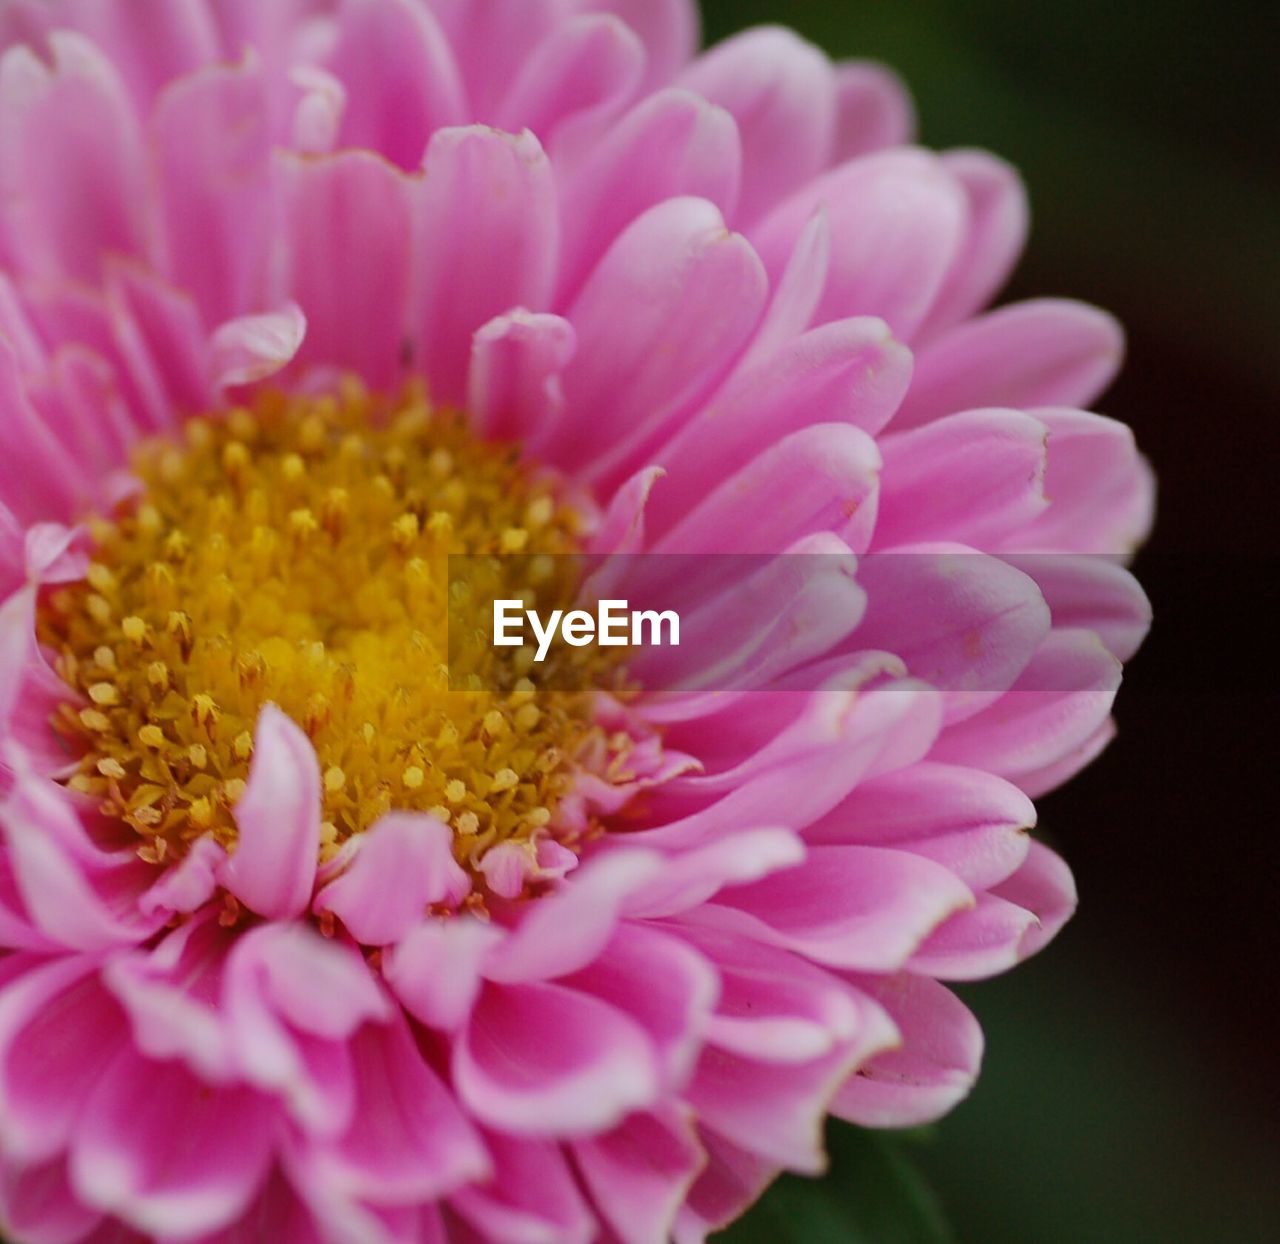 Macro shot of pink daisy flower